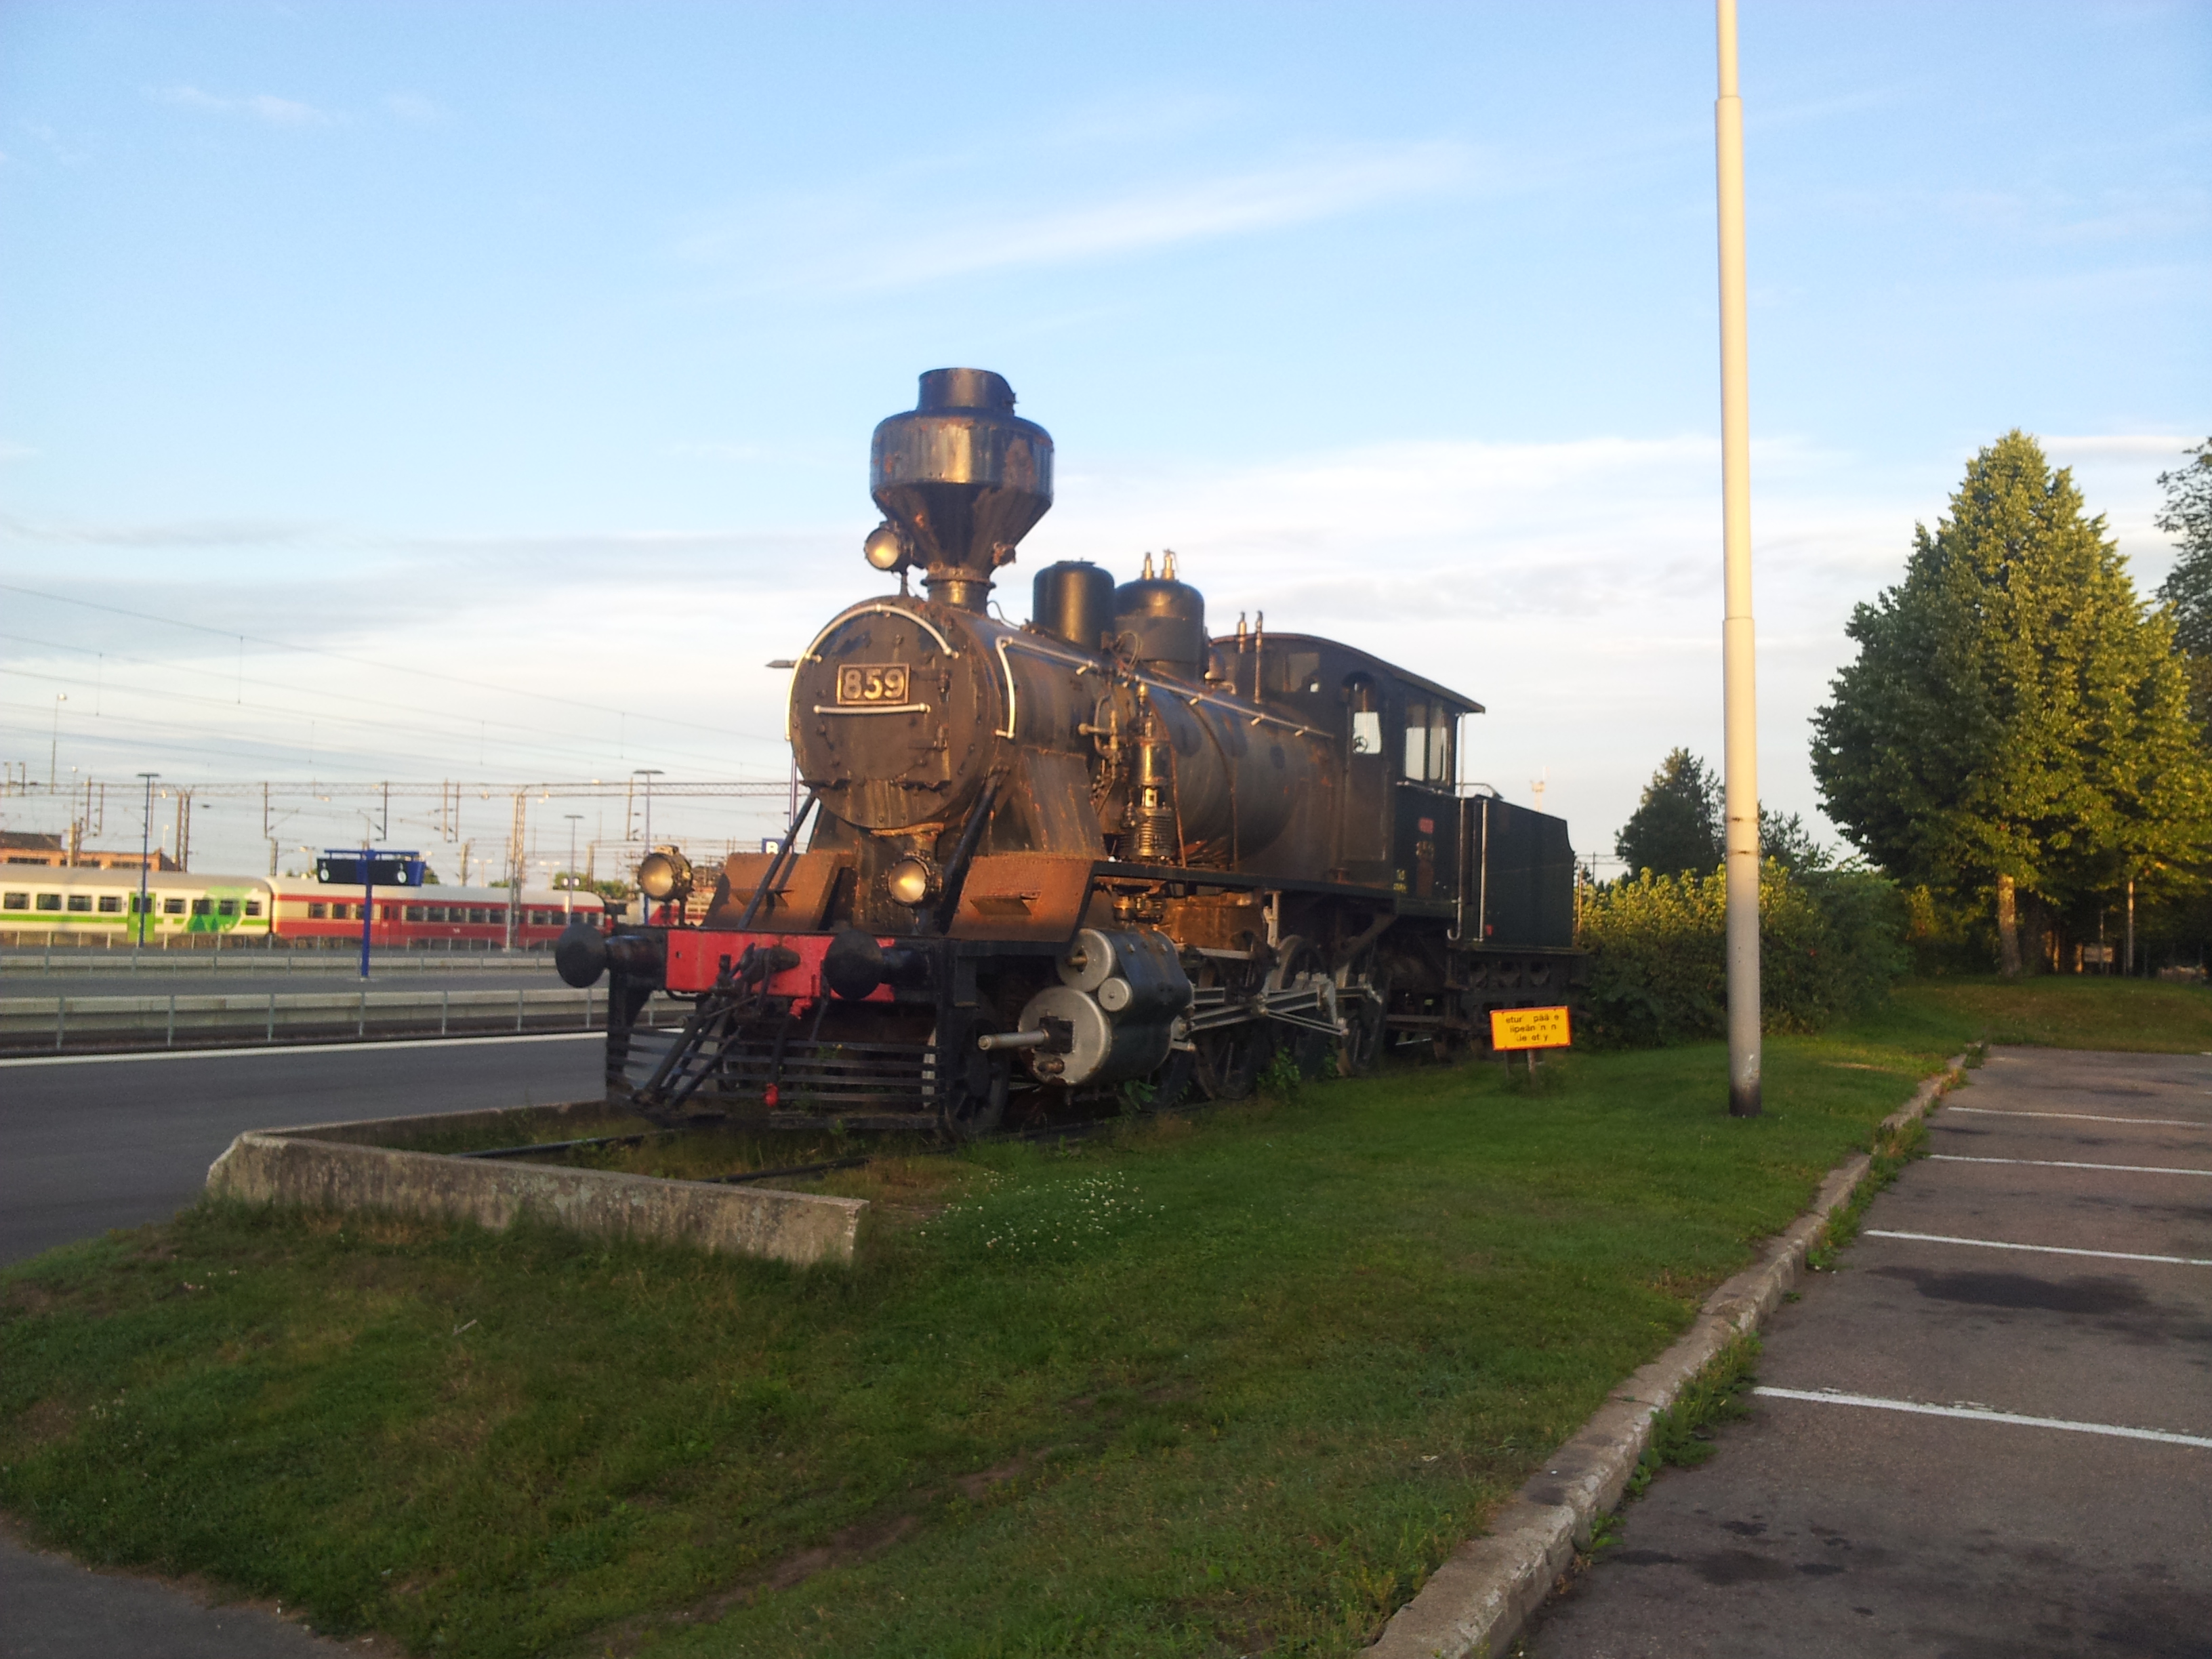 Old train, Locomotive, Old, Steam, Train, HQ Photo